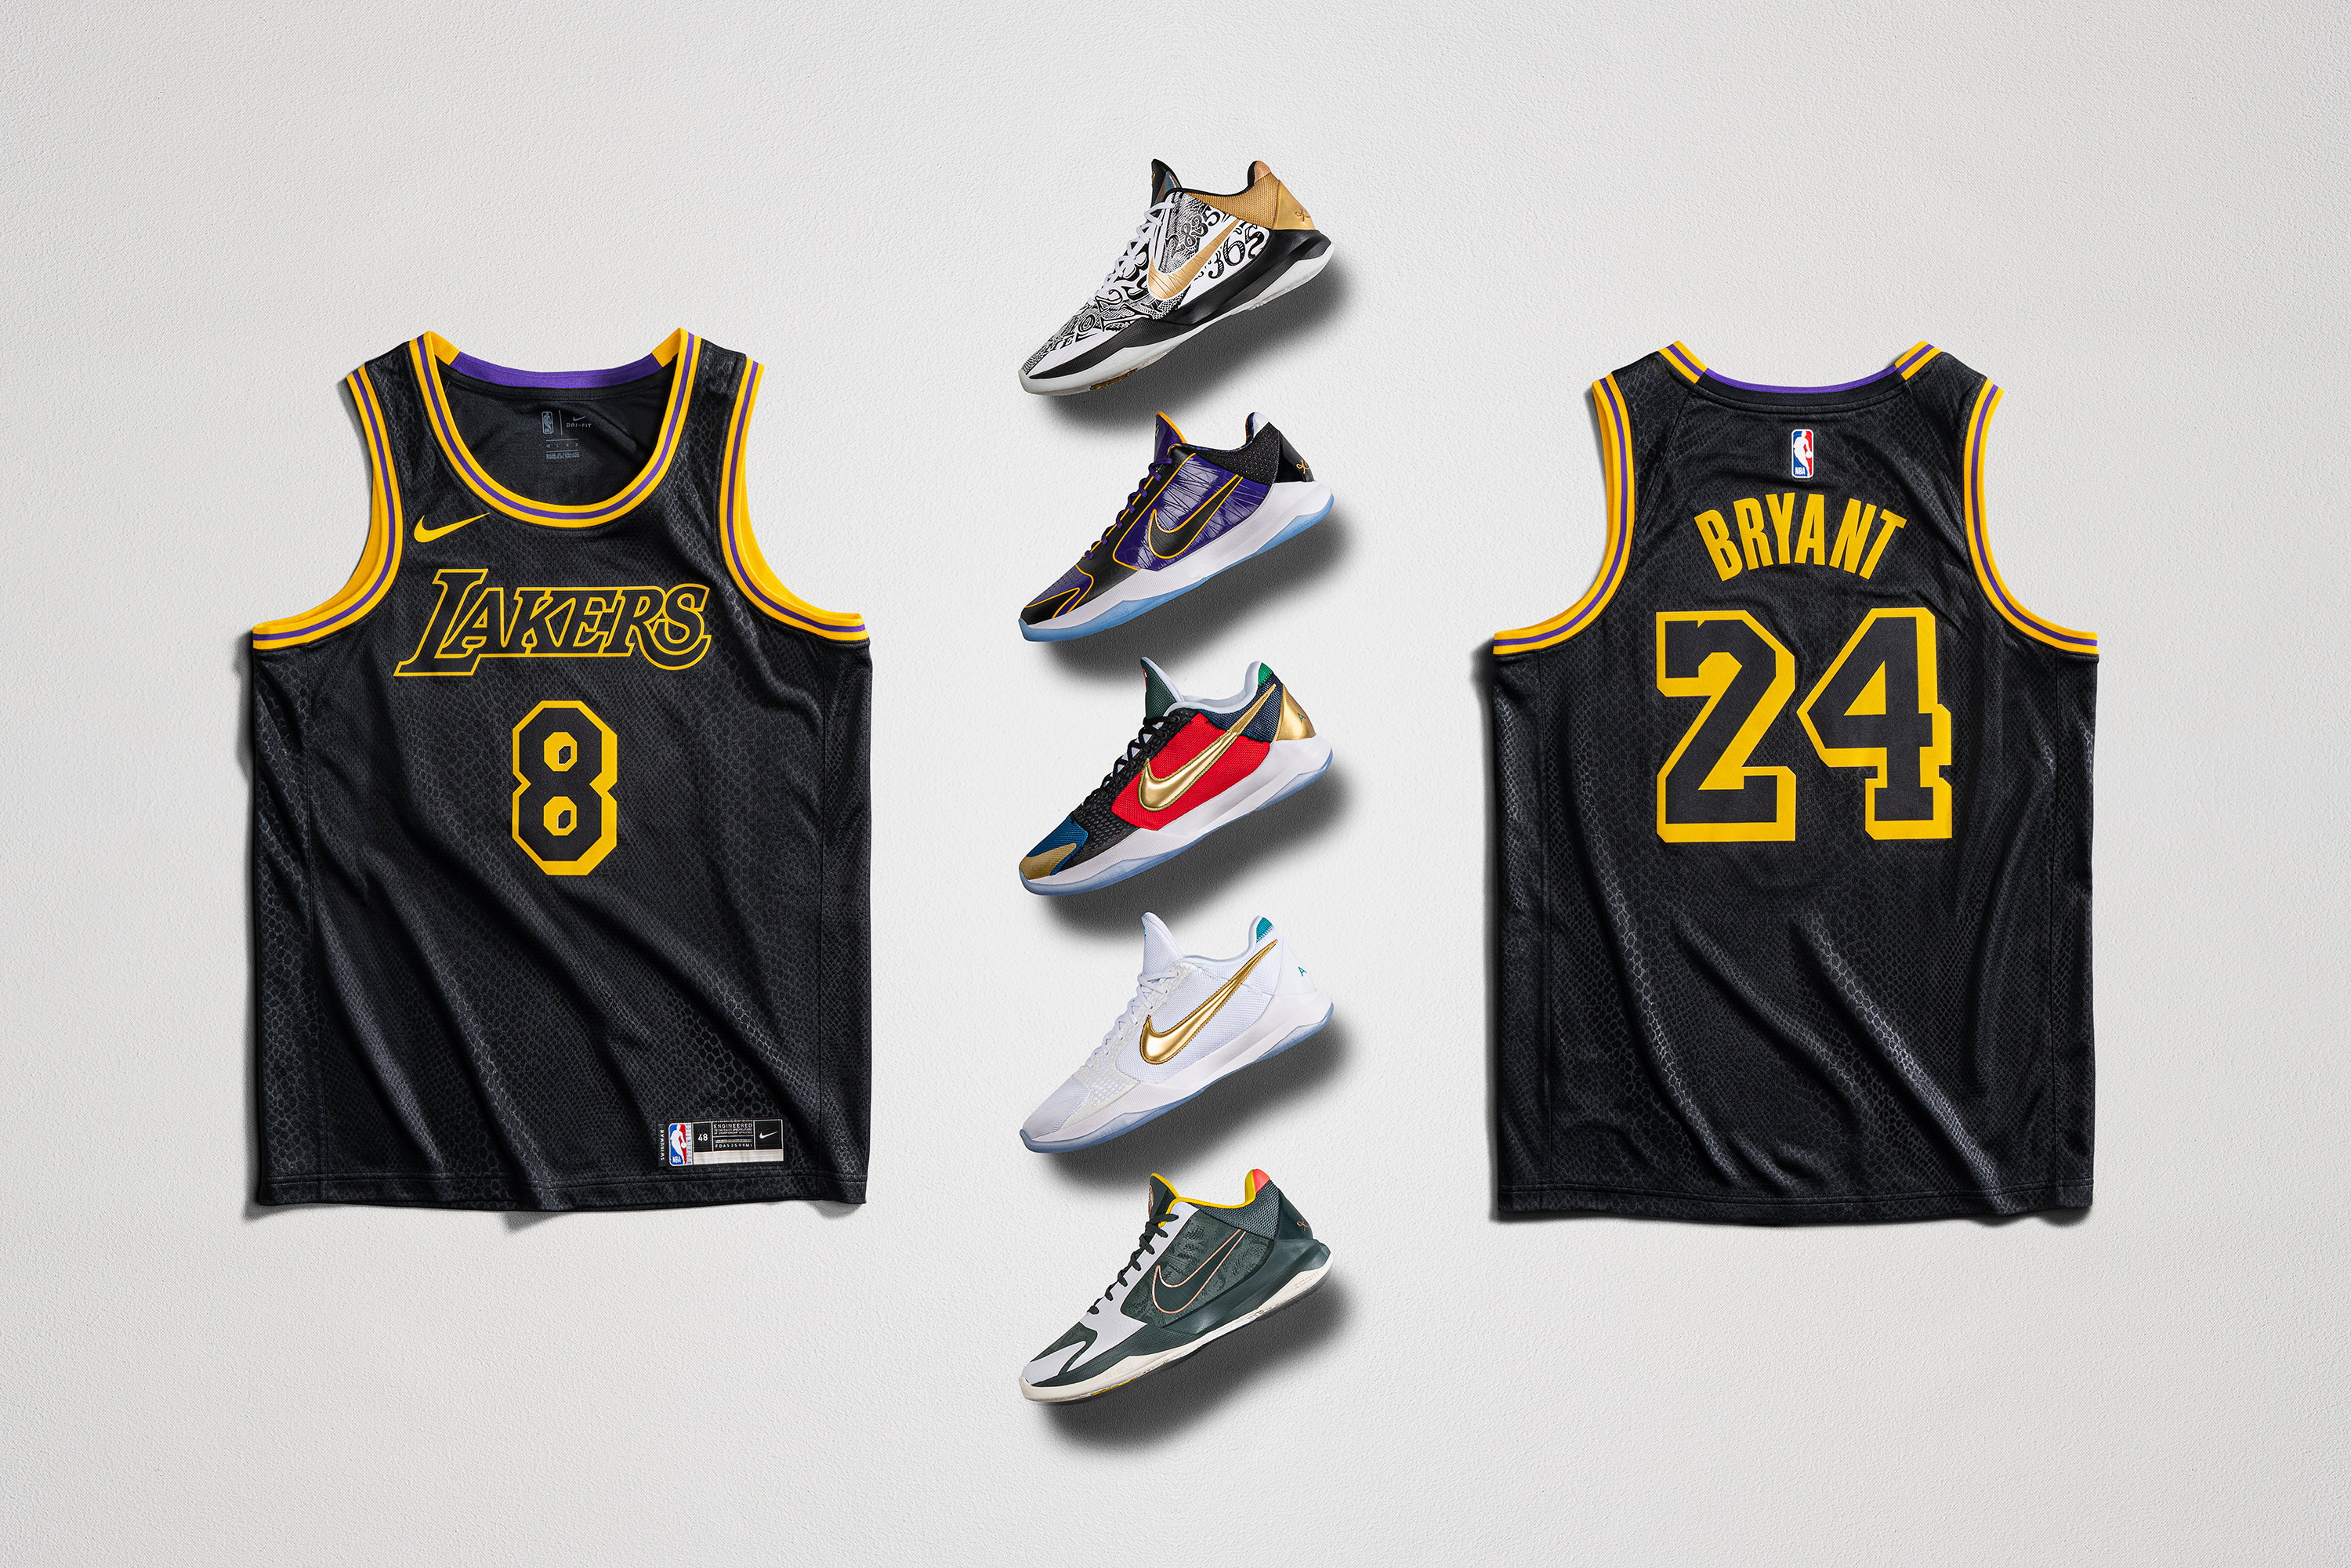 Nike bringing back Kobe Bryant's 